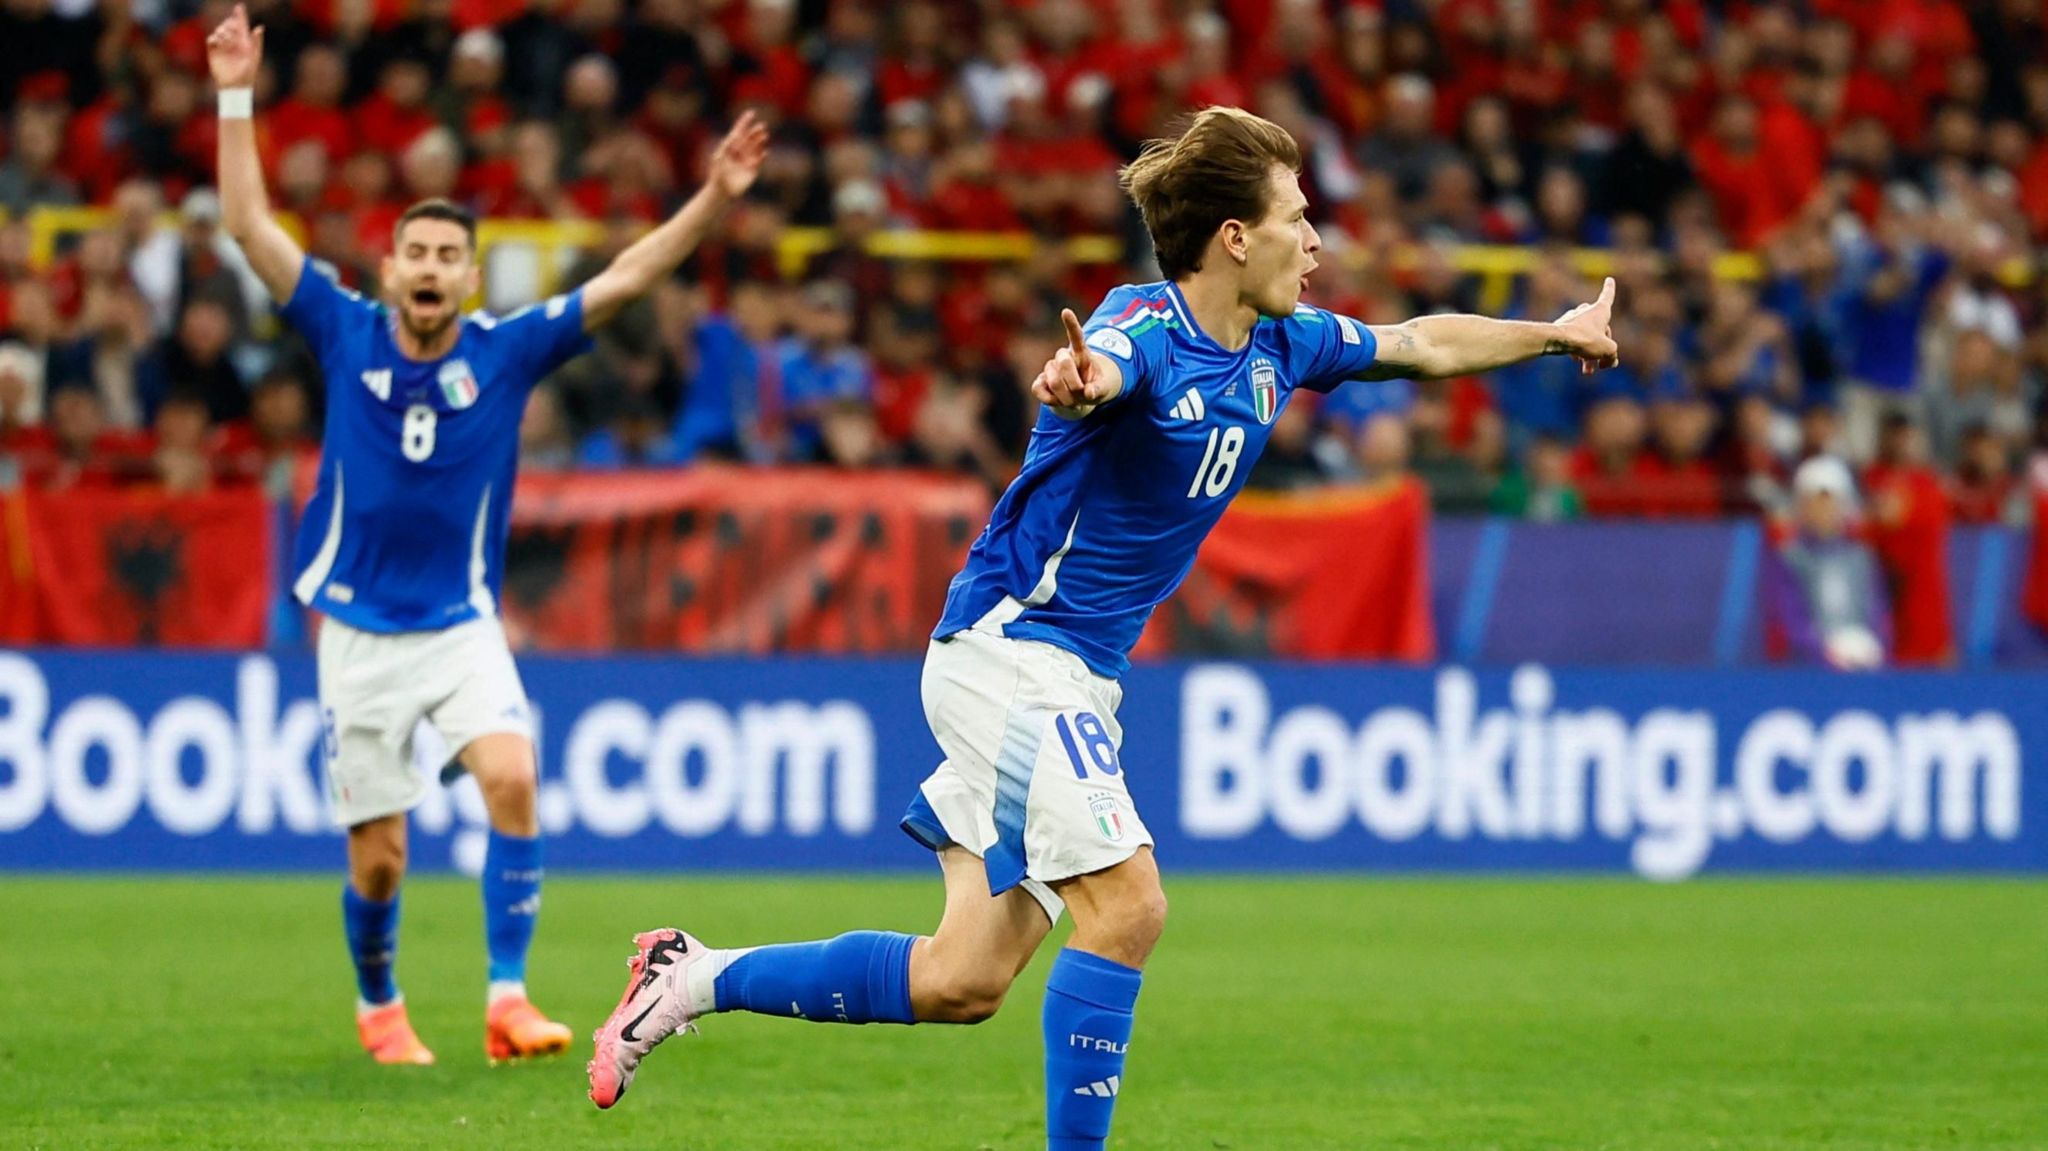 Nicolo Barella celebrates after scoring for Italy against Albania